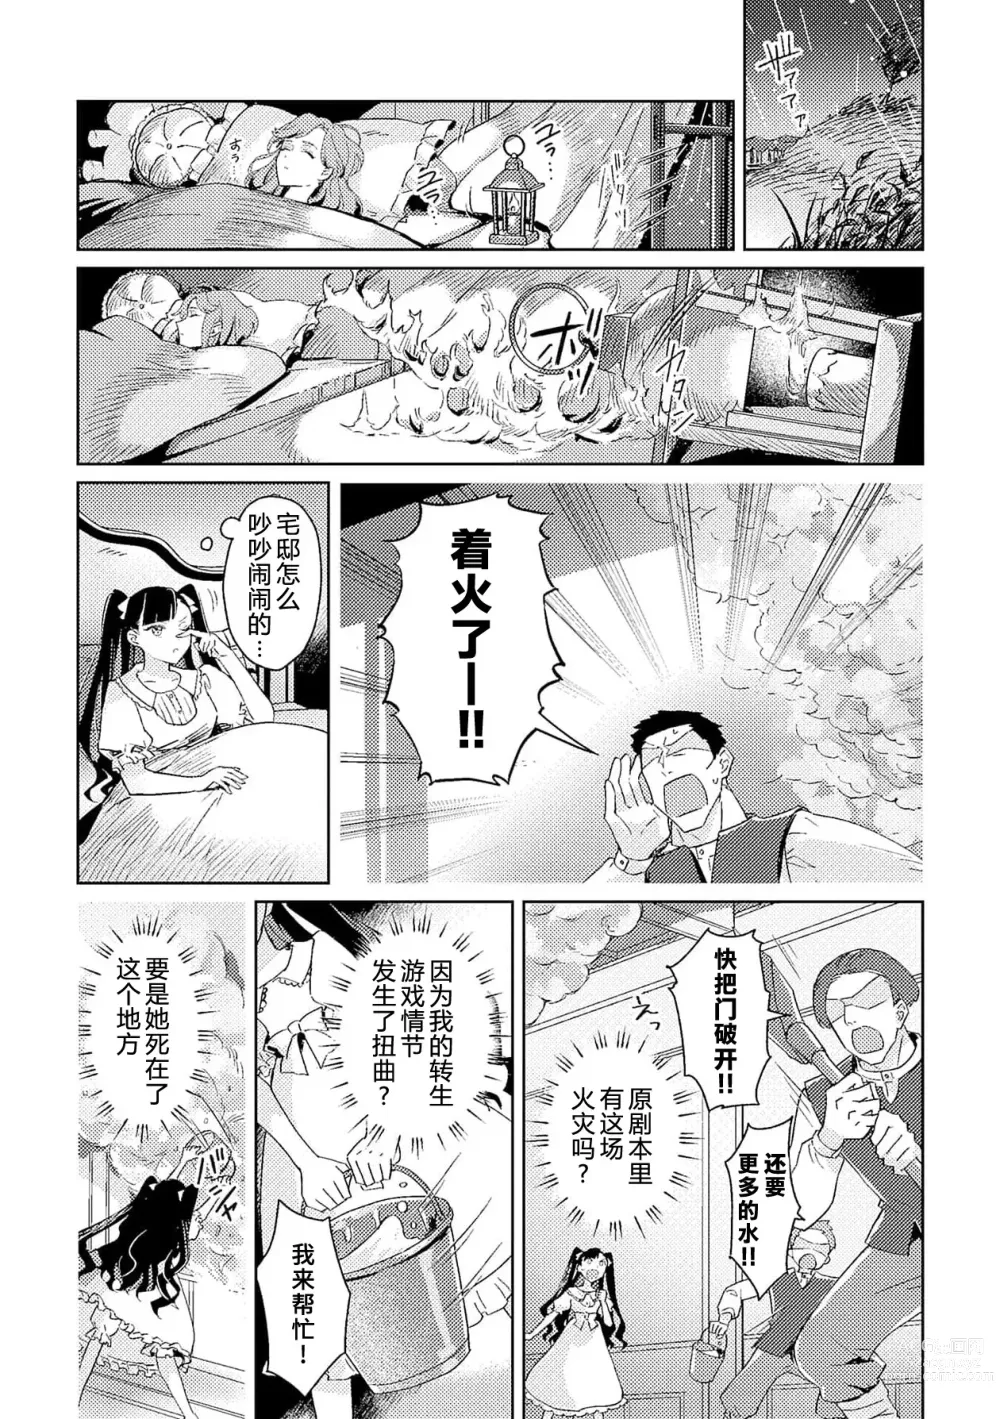 Page 10 of manga 身为恶役千金，堕落于魔界王子身下这条路线真的可以有？ 1-4